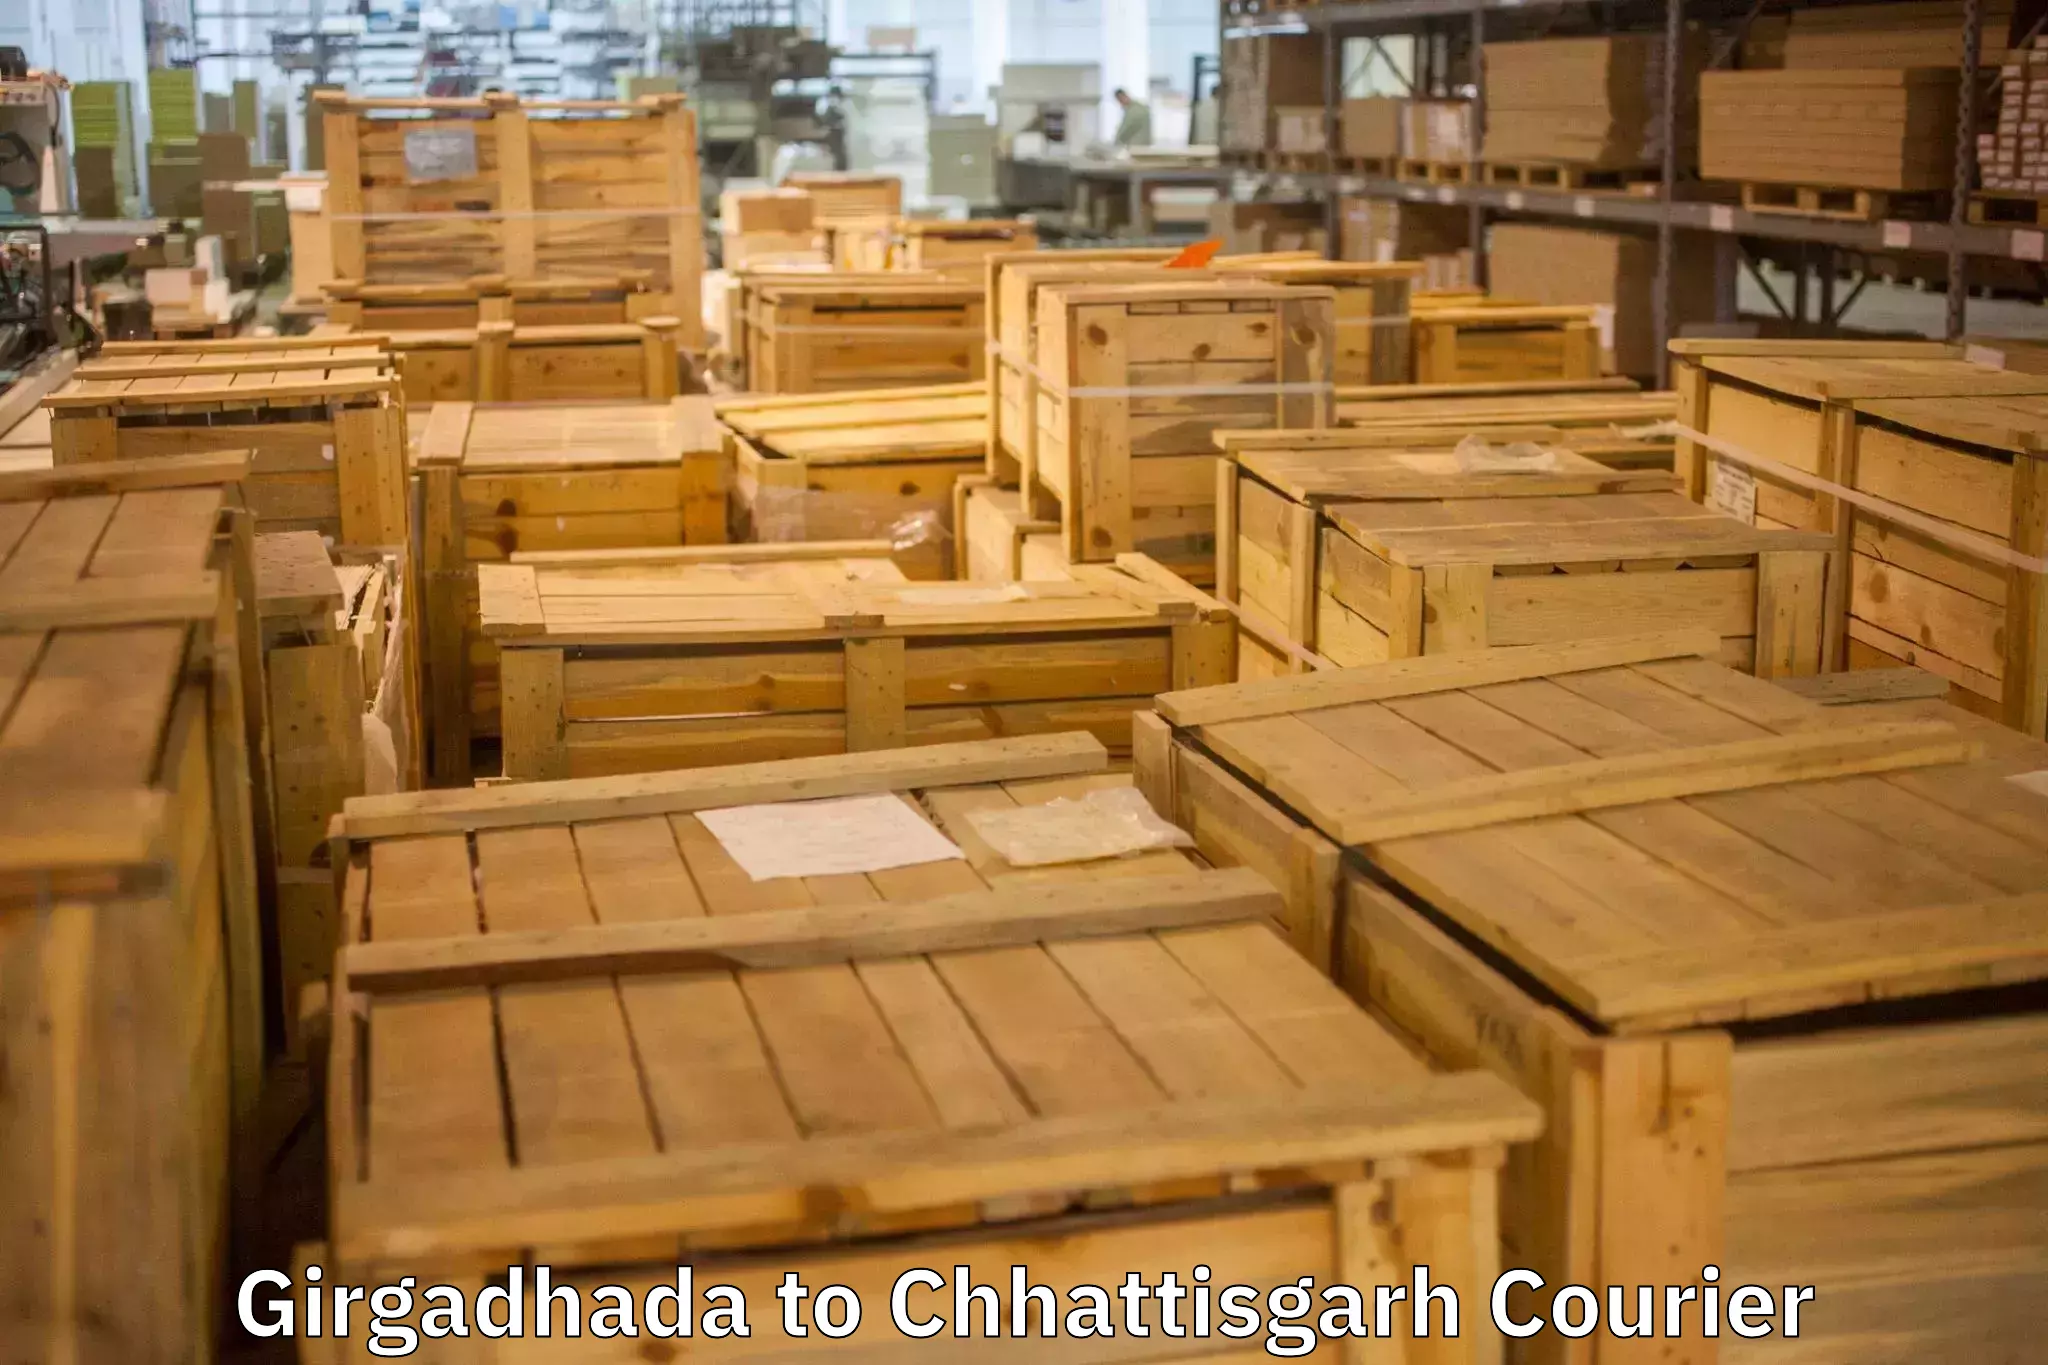 Trusted moving company Girgadhada to Charama